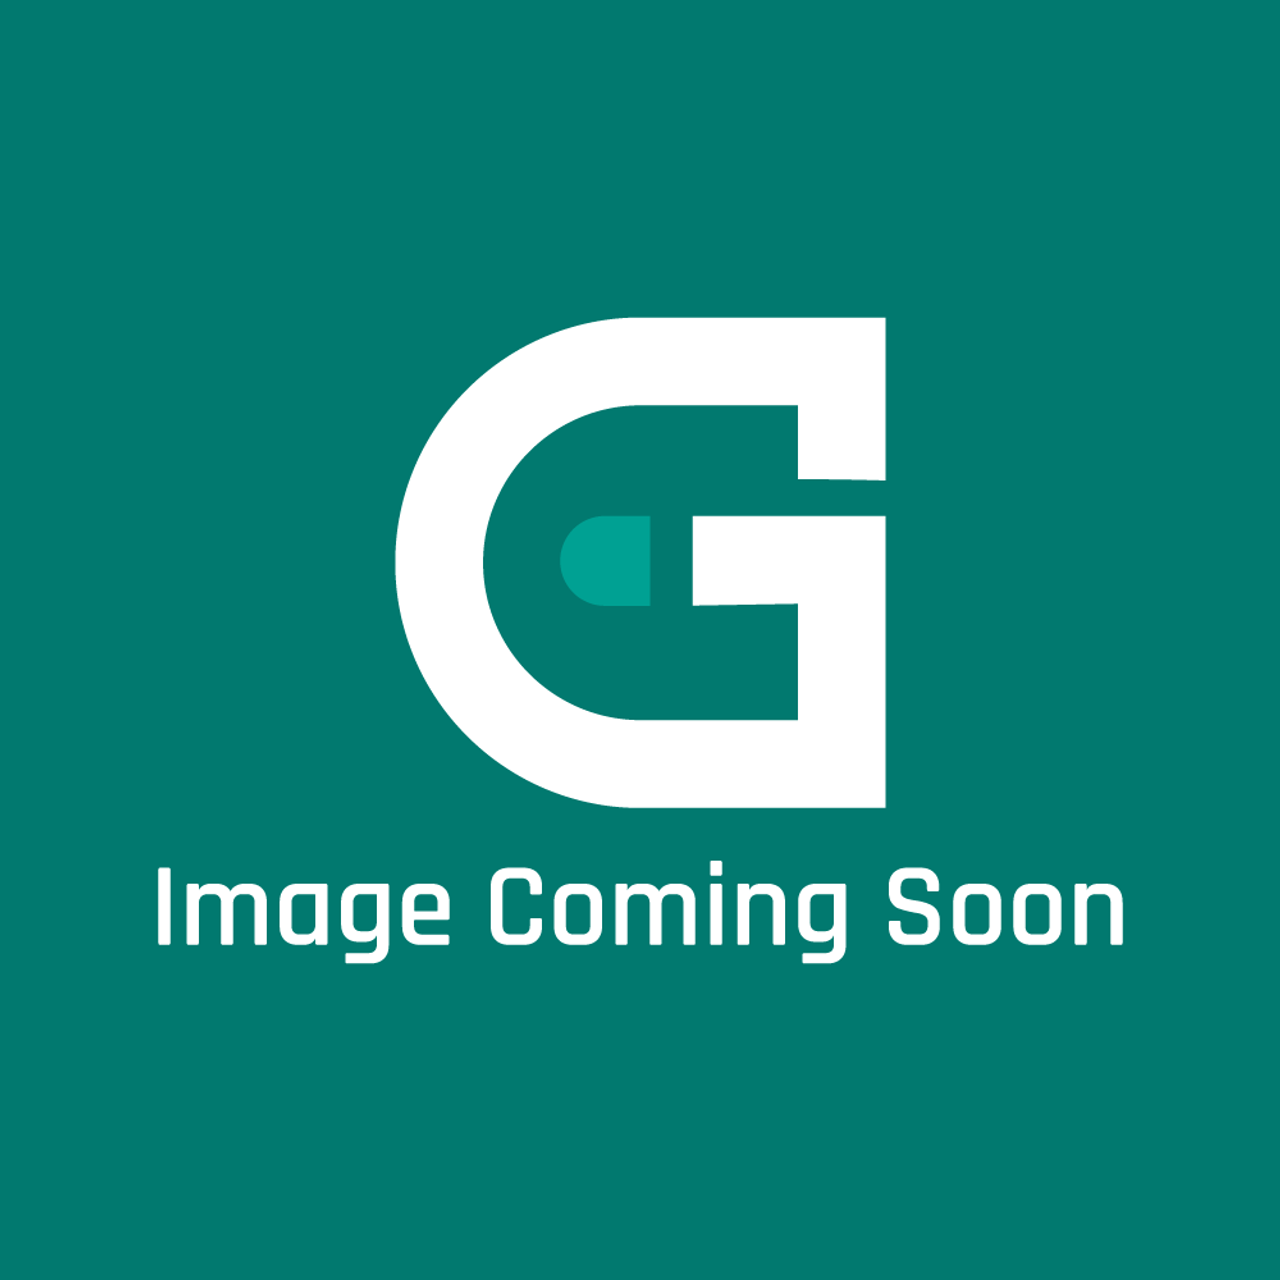 GE Appliances WB48X31885 - Broiler Pan - Image Coming Soon!